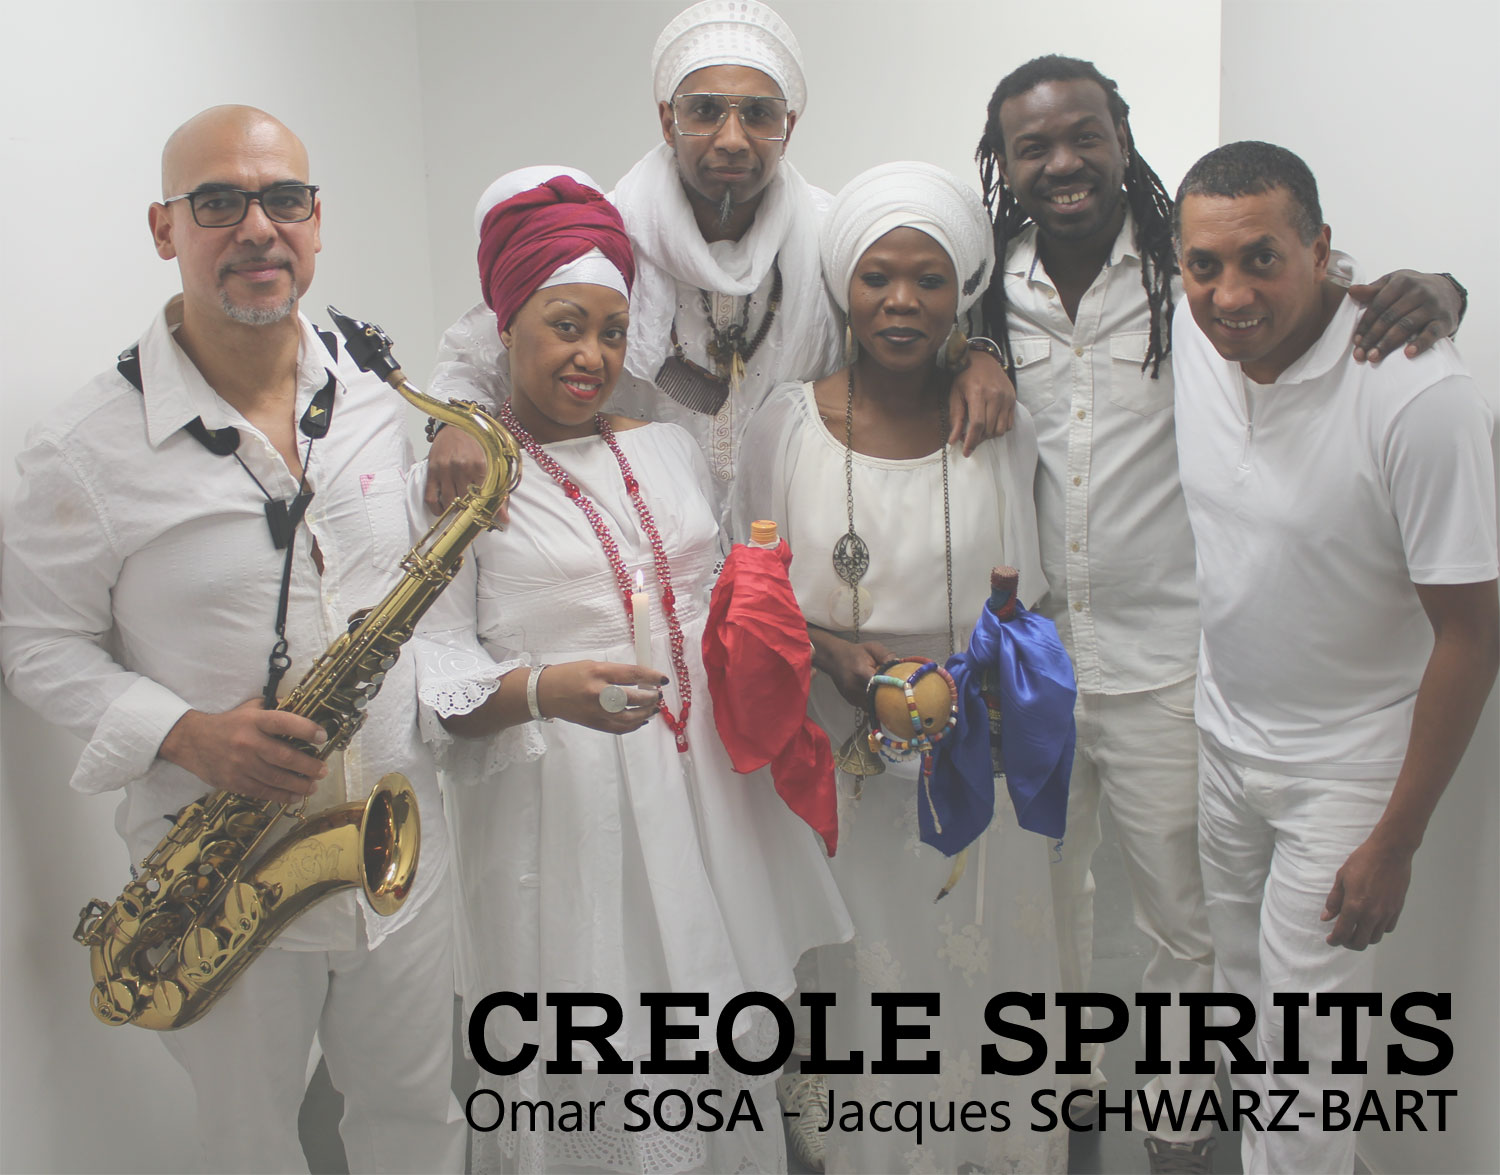 Jacques Schwarz-Bart & Omar Sosa Creole Spirits